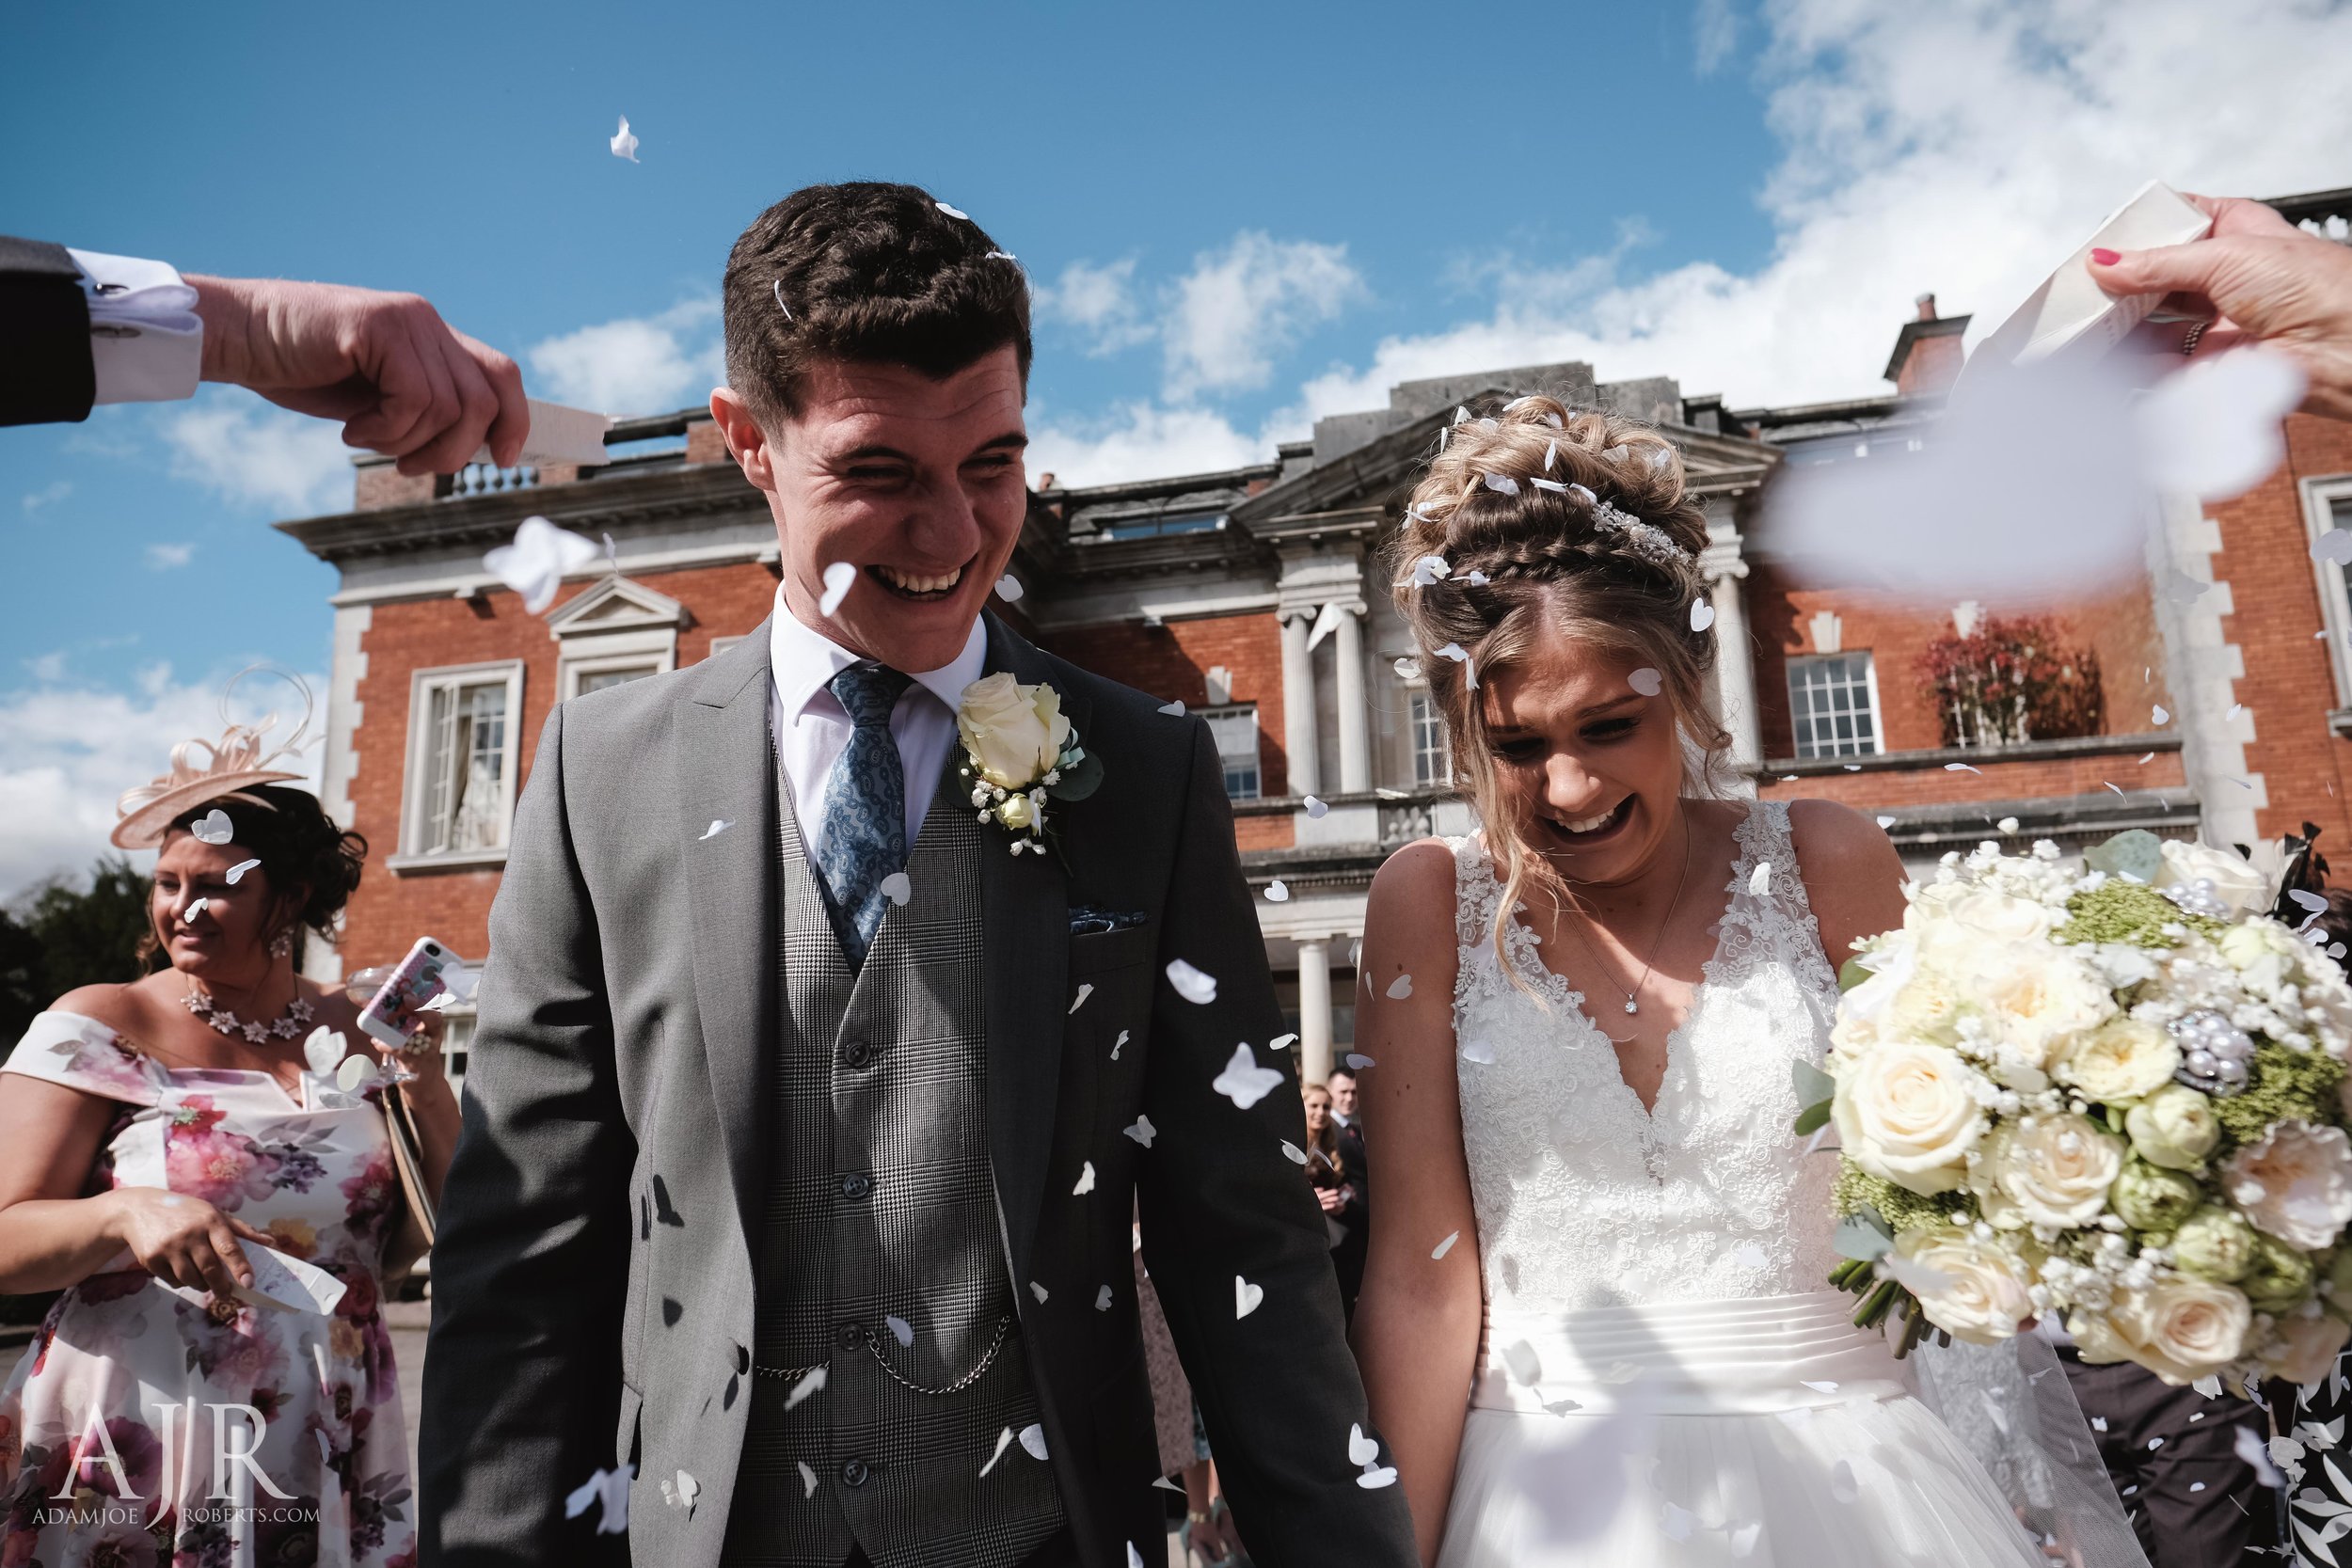 Eaves hall documenrty wedding photography | widnes cheshire wedding photographer sneak peek (7 of 11).jpg